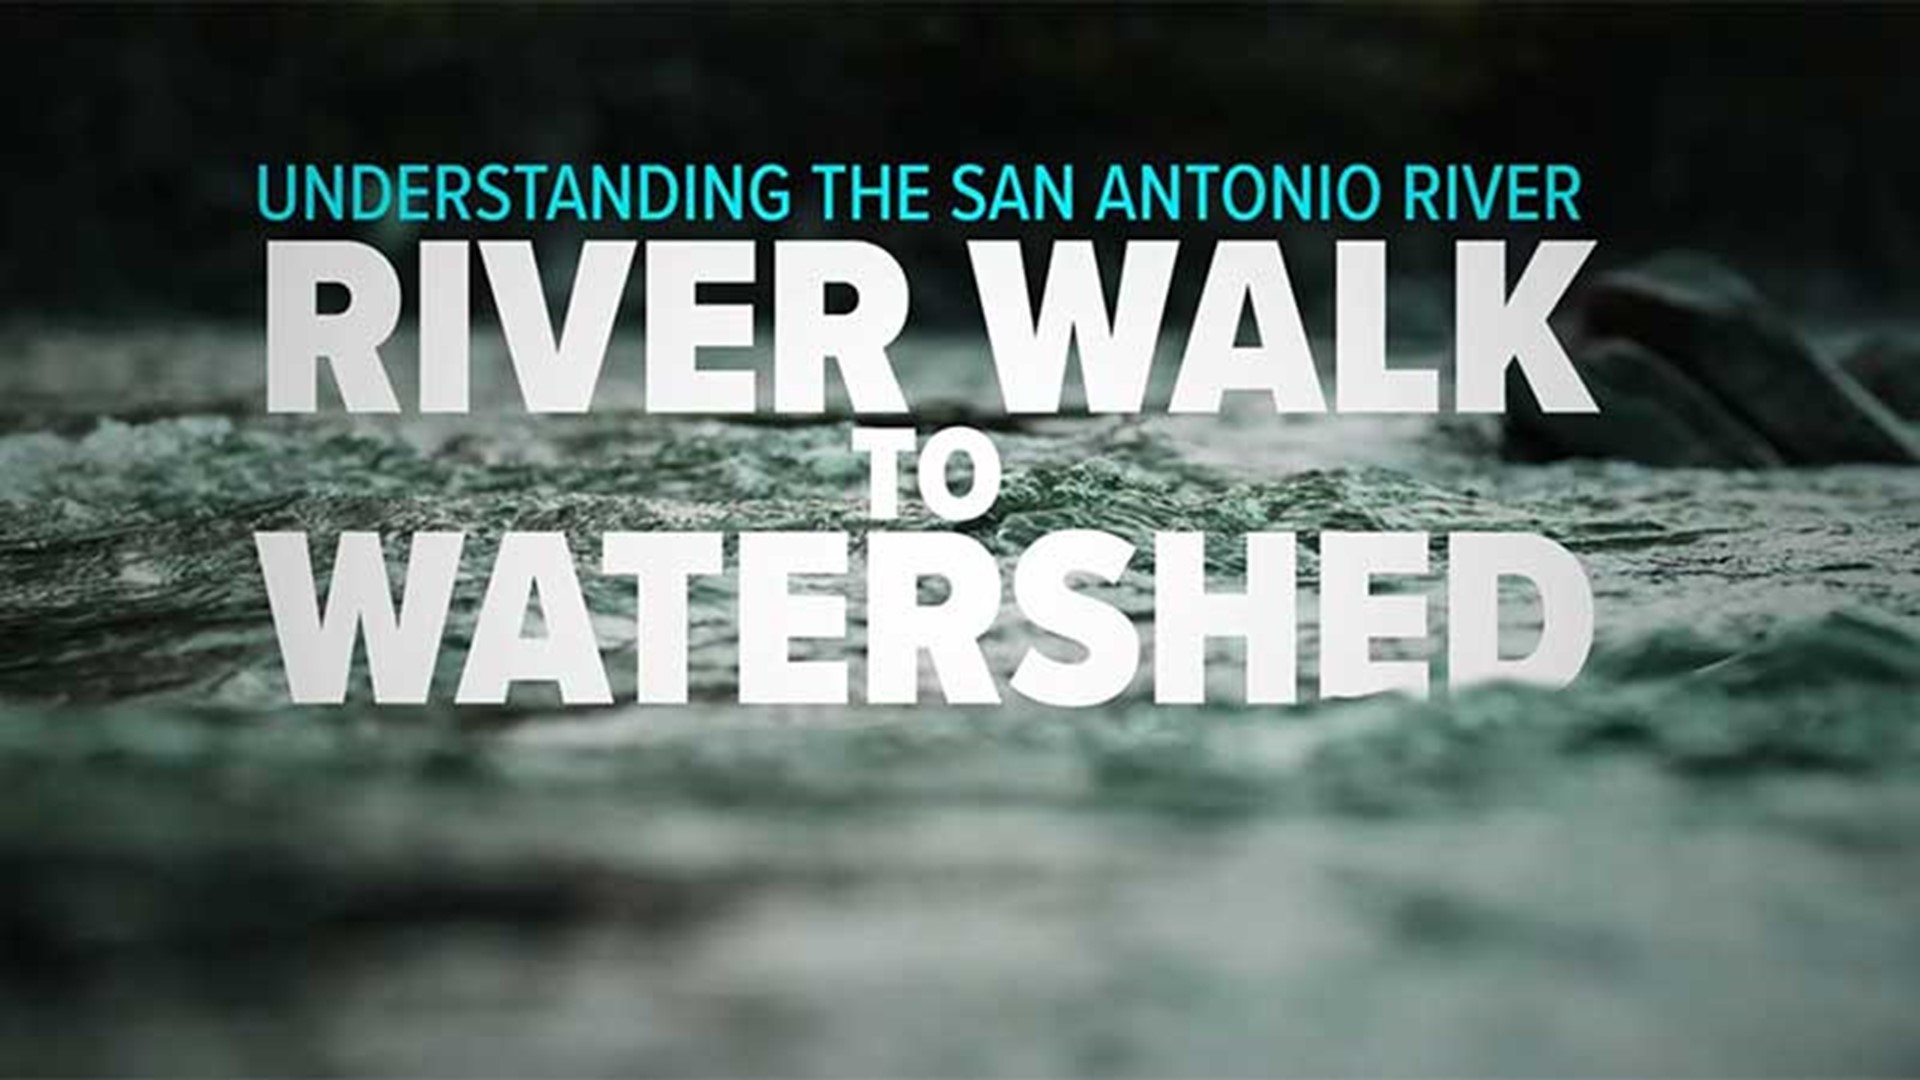 KENS 5 digital meteorologist Teresa Velasco hosts a look at the environmental significance of the San Antonio River.